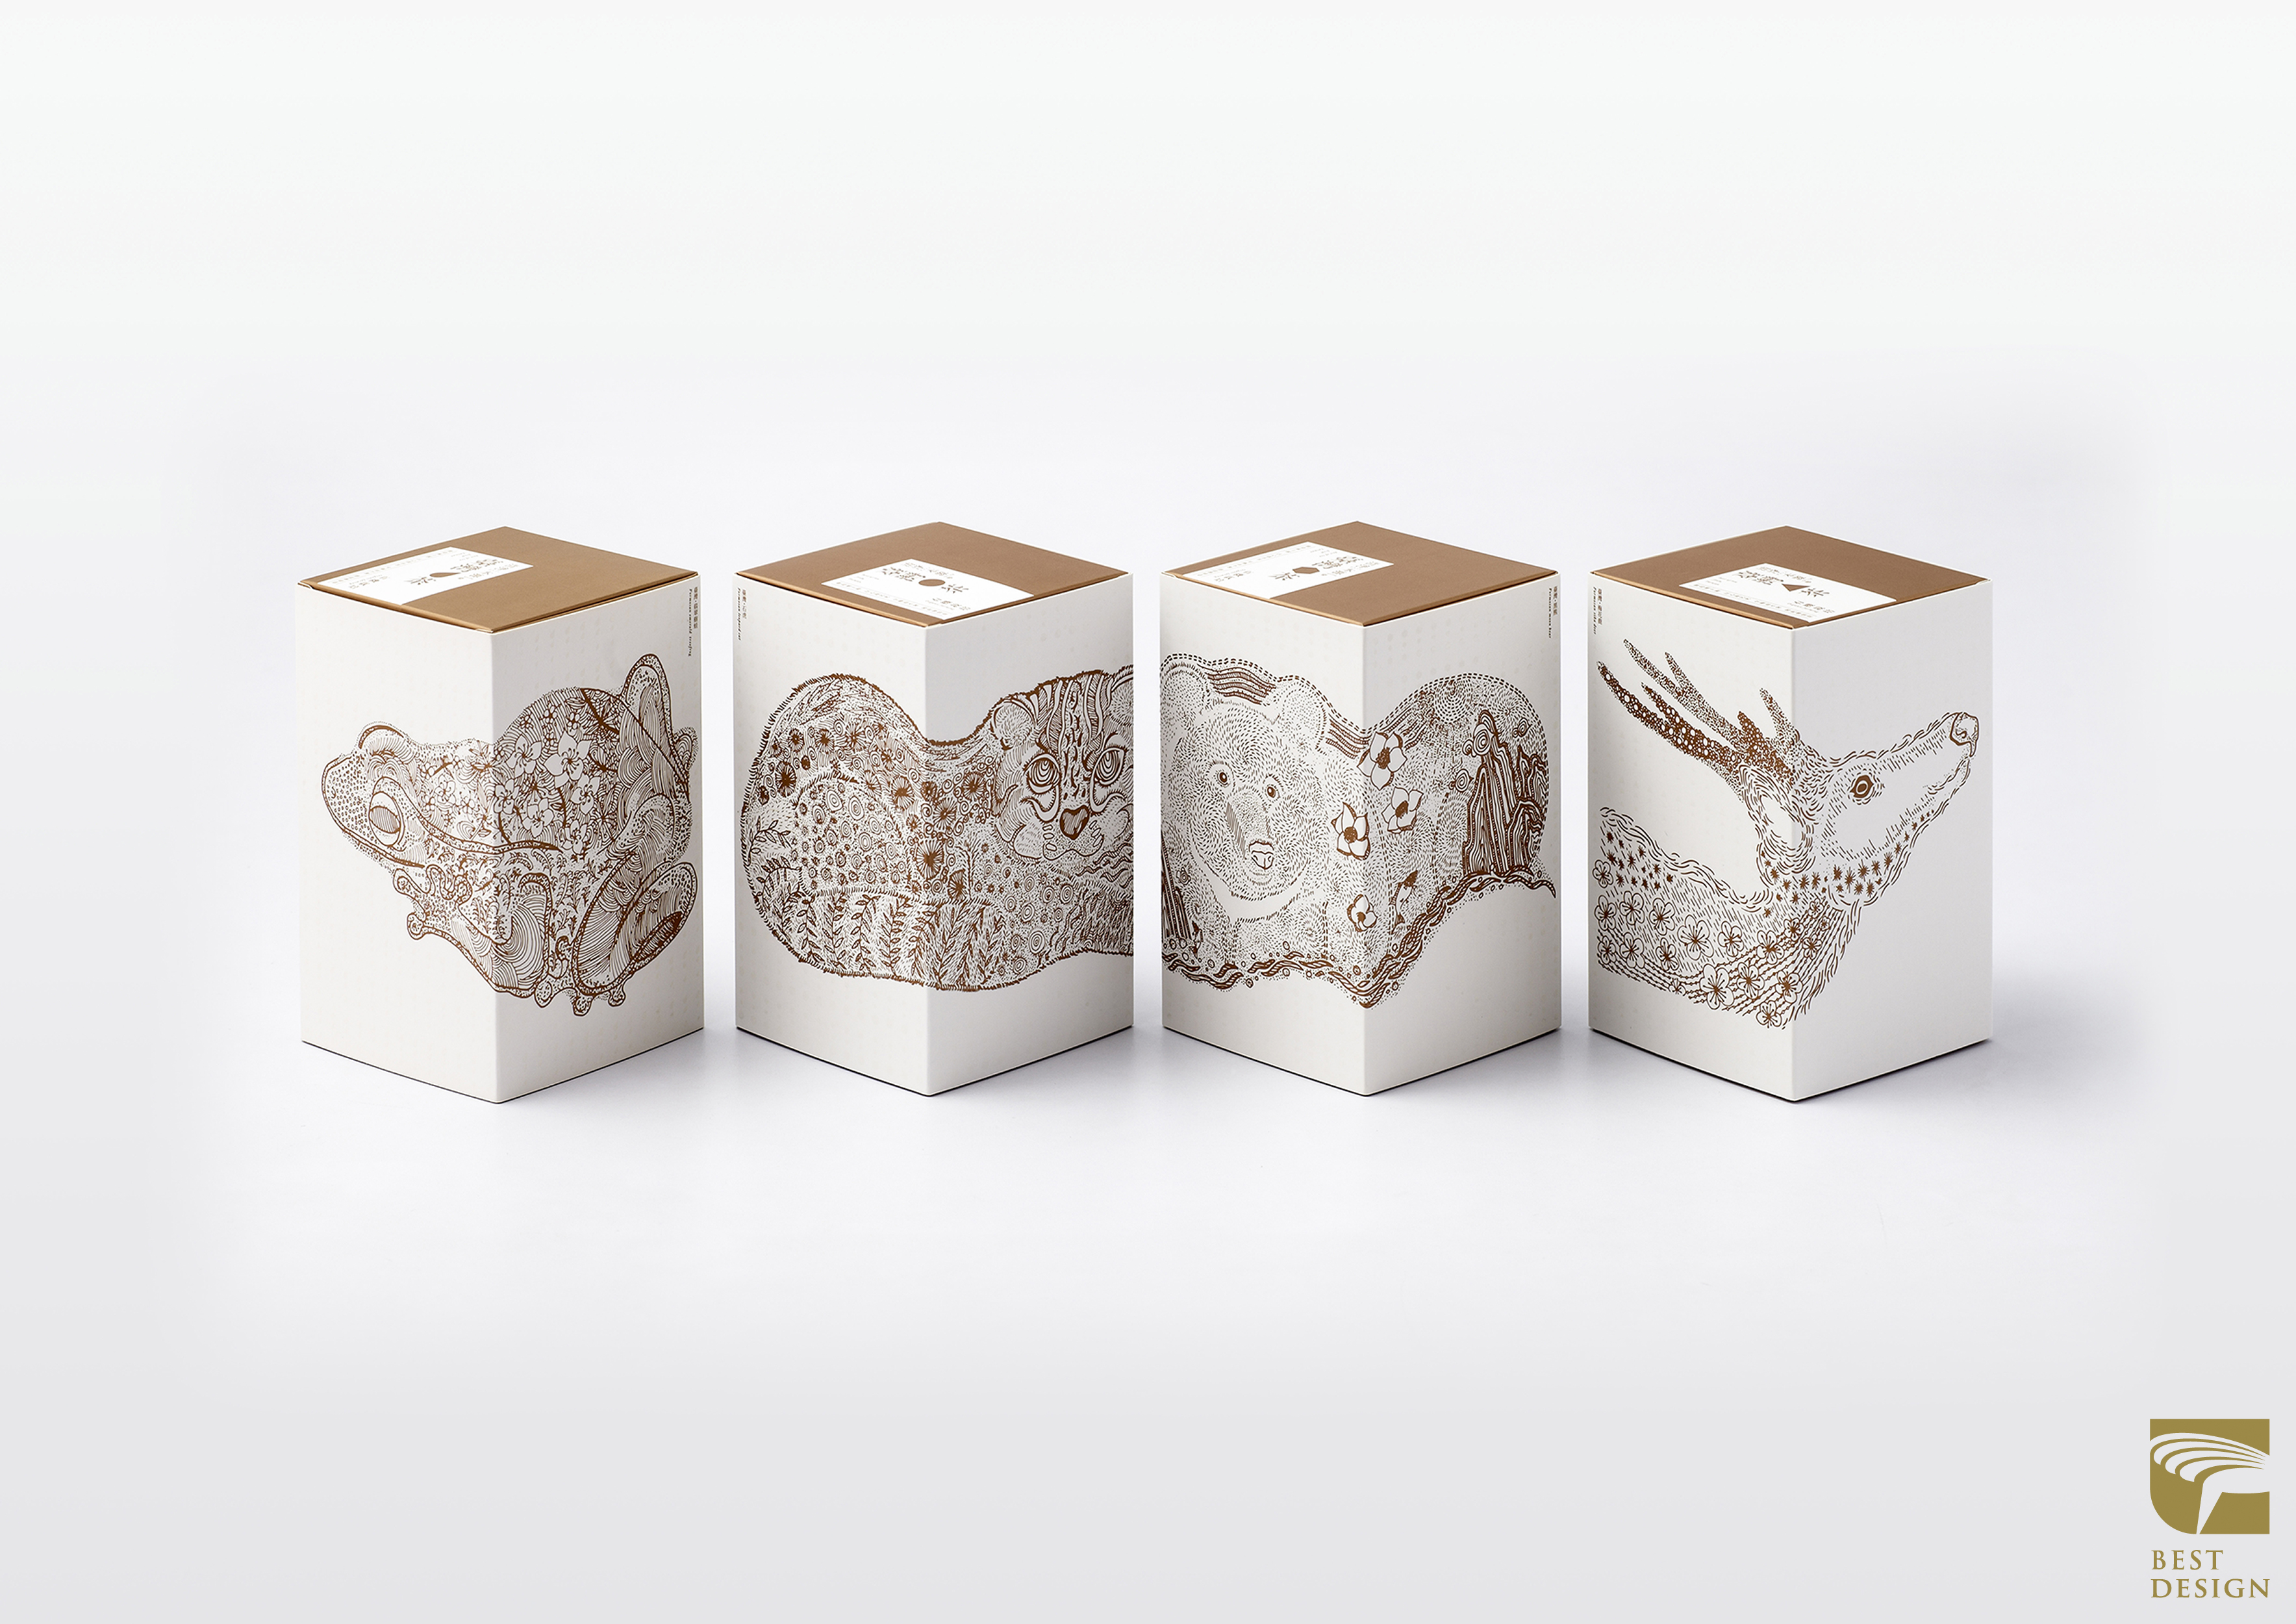 Tse-Xin Organic Tea Carrying Case – Taiwan Tea Series of Conservation Animals by 3ya Design Associates, Image courtesy of Golden Pin Design Awards